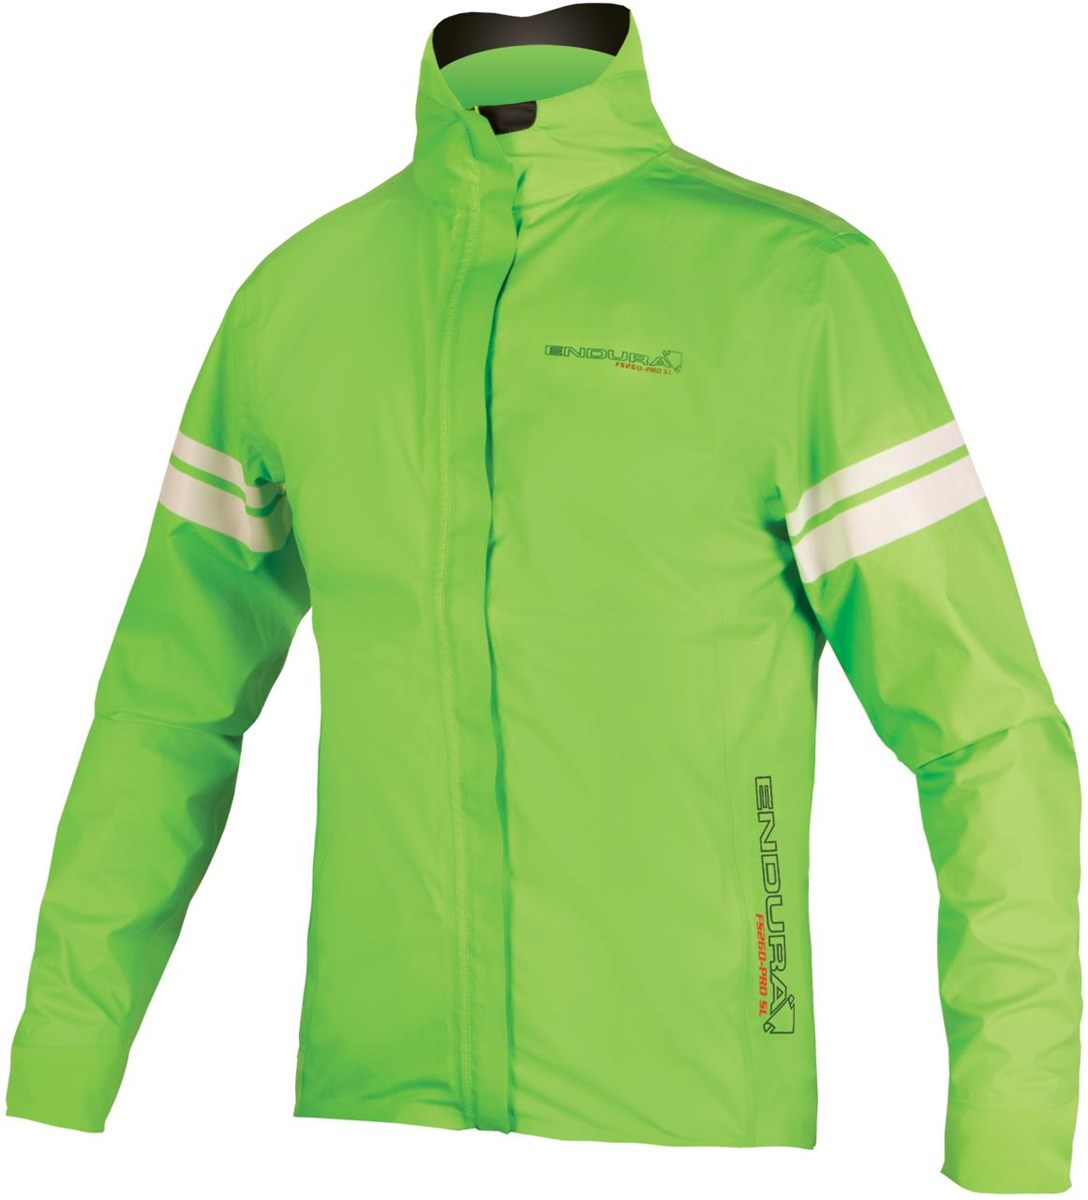 Endura FS260 Pro SL Shell Cycling Jacket